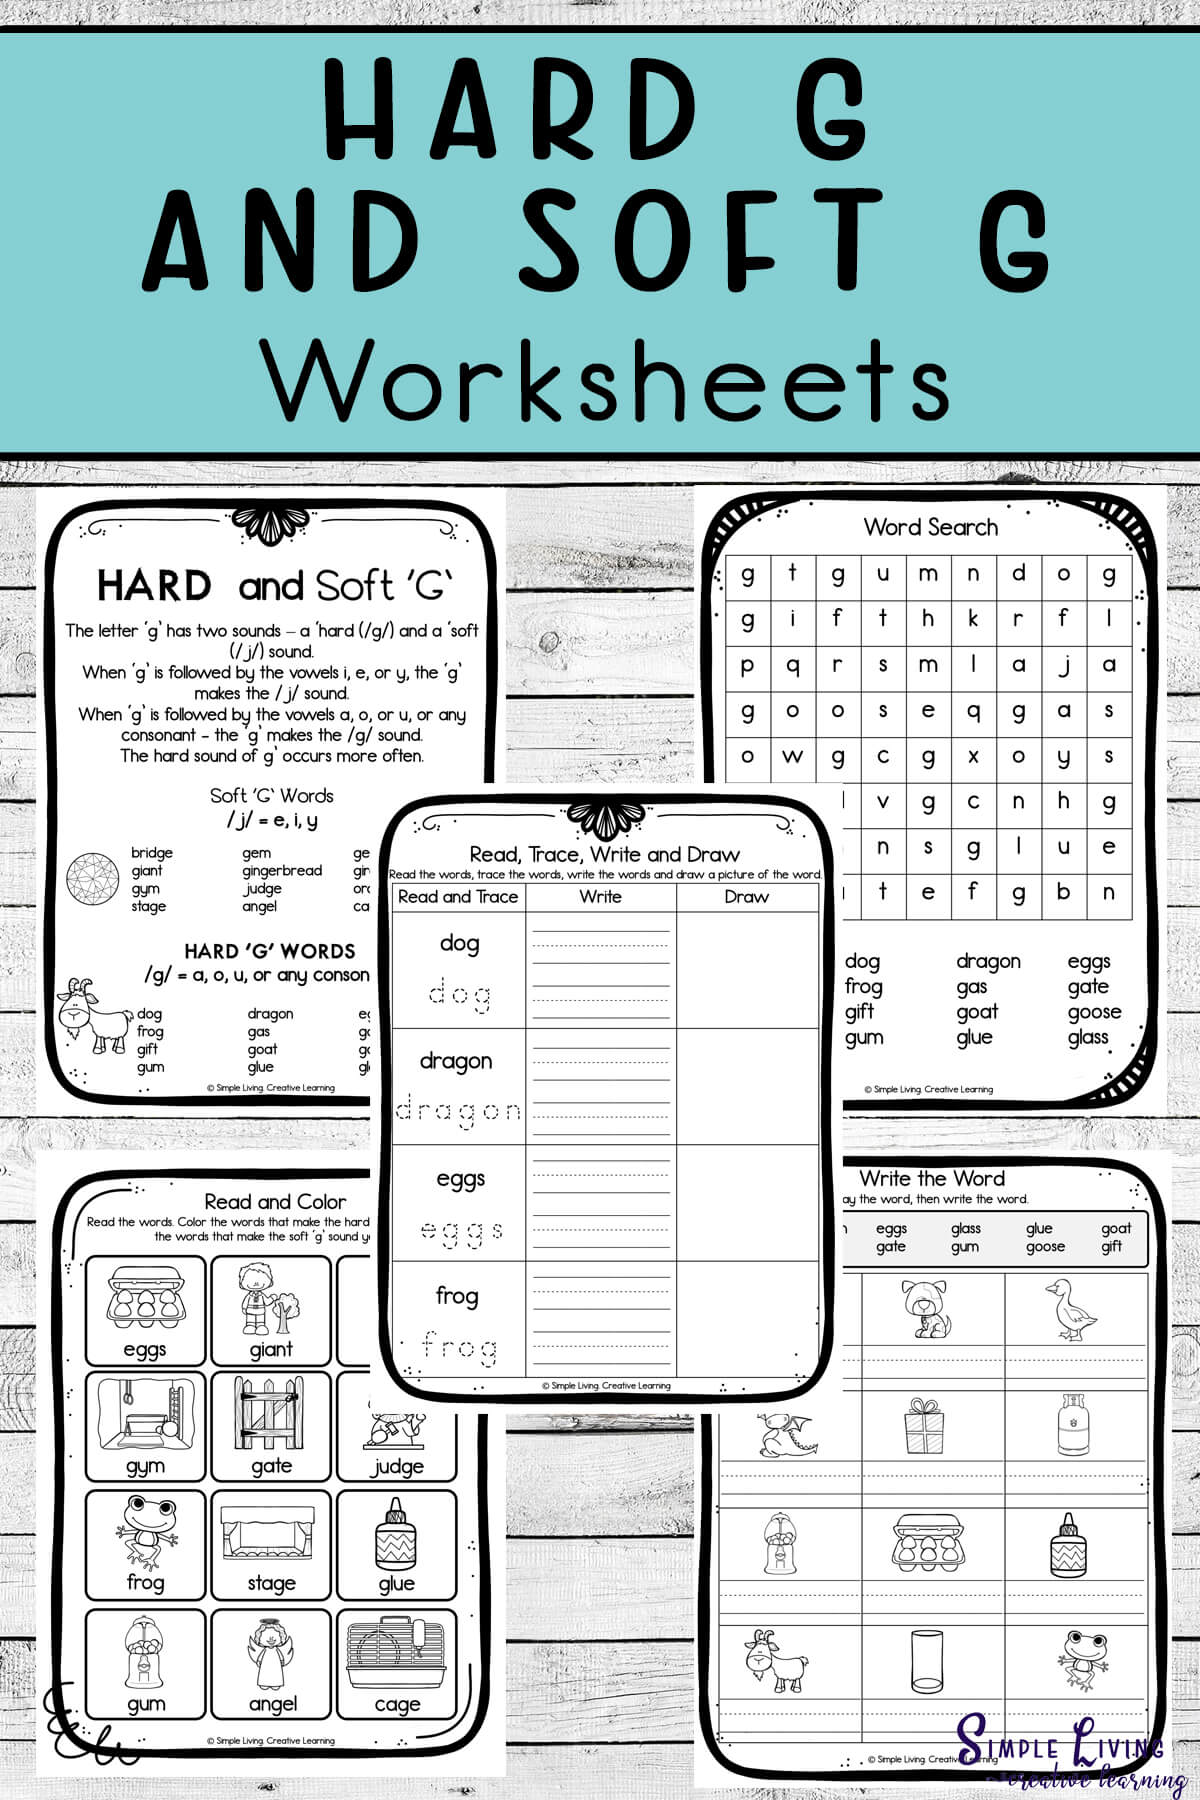 Hard G and Soft G Worksheets